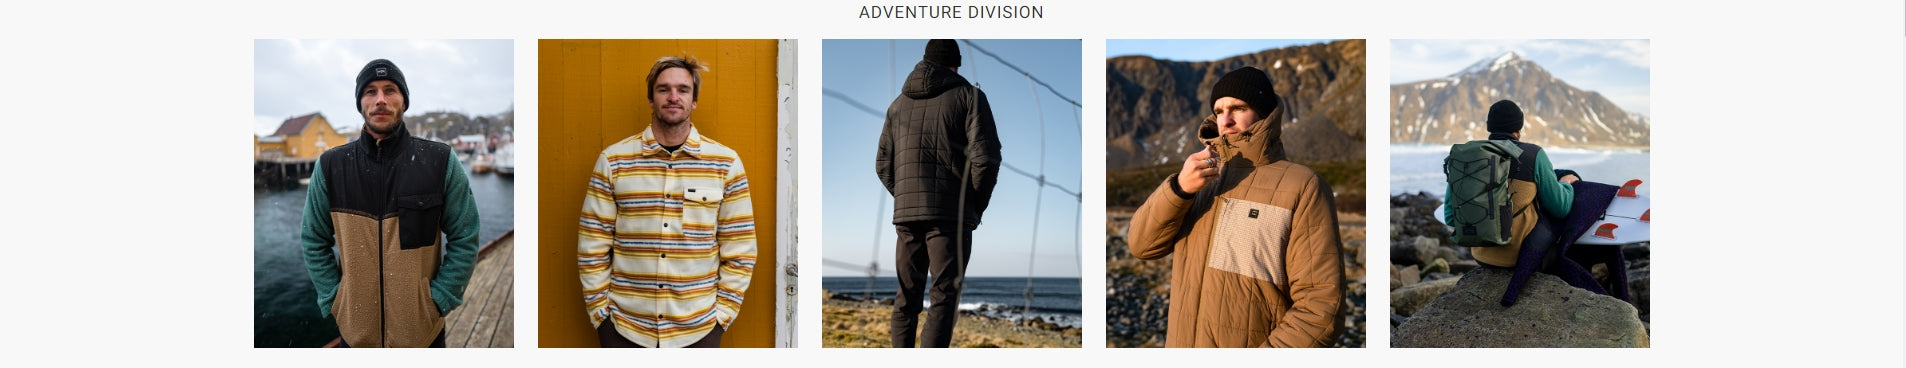 Billabong A/DIV Adventure Division Clothing